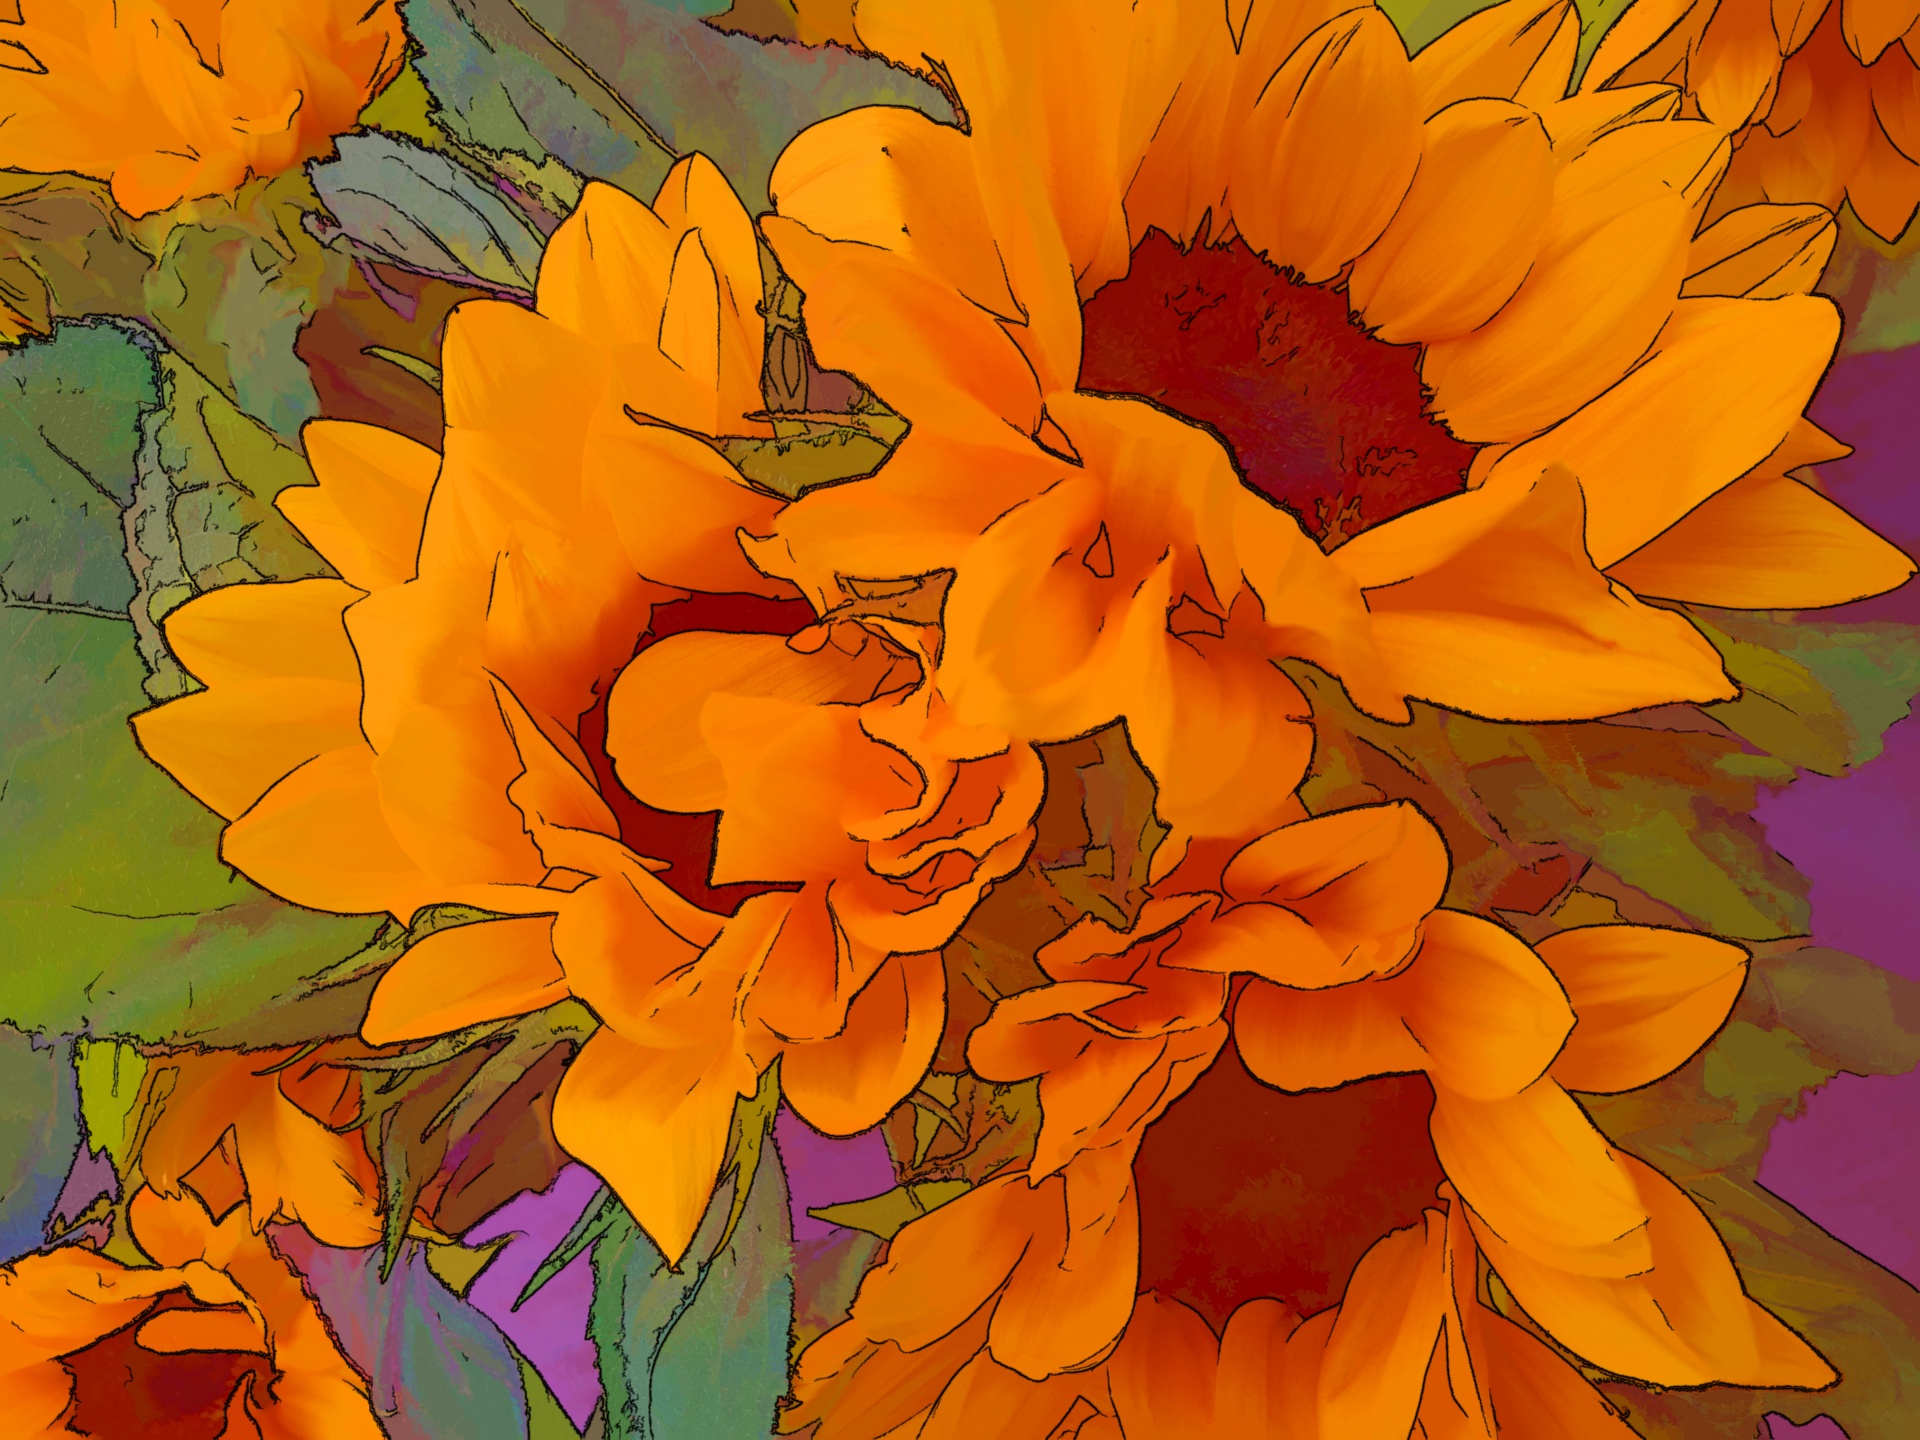 three huge sunflowers freeimage, publicdomain, CC0